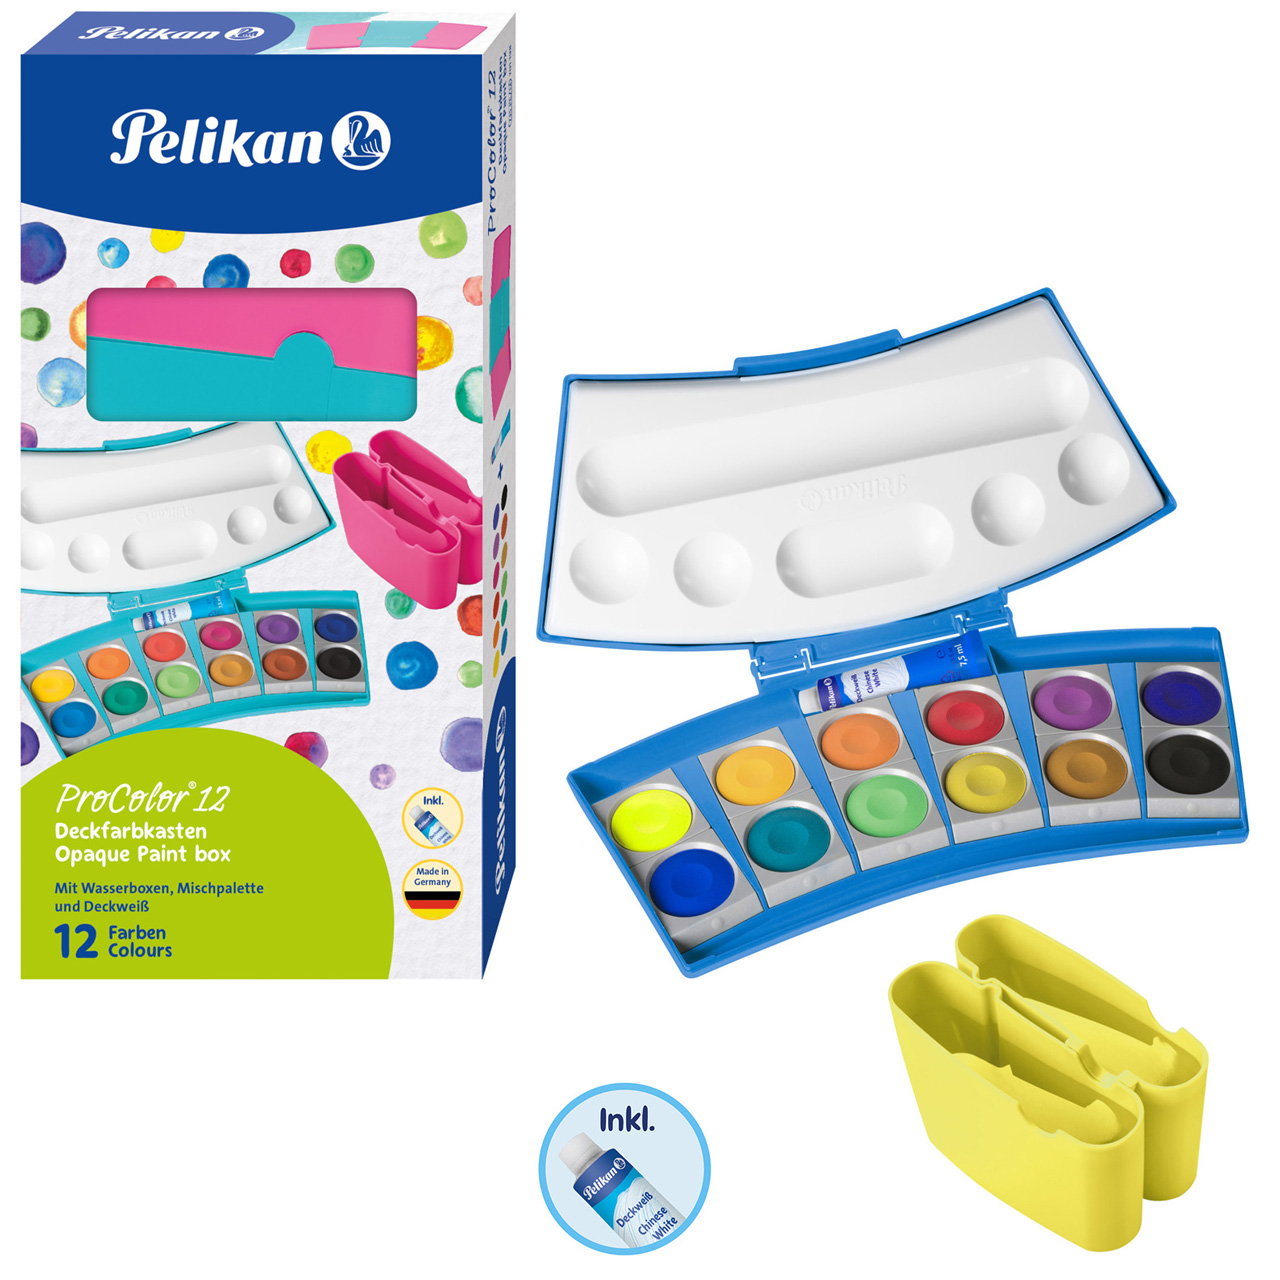 Pelikan-ProColor-12er-Deckfarbkasten-farbkasten-gelb-blau-701204-pink-blau-701198-online-kaufen-lafueliki